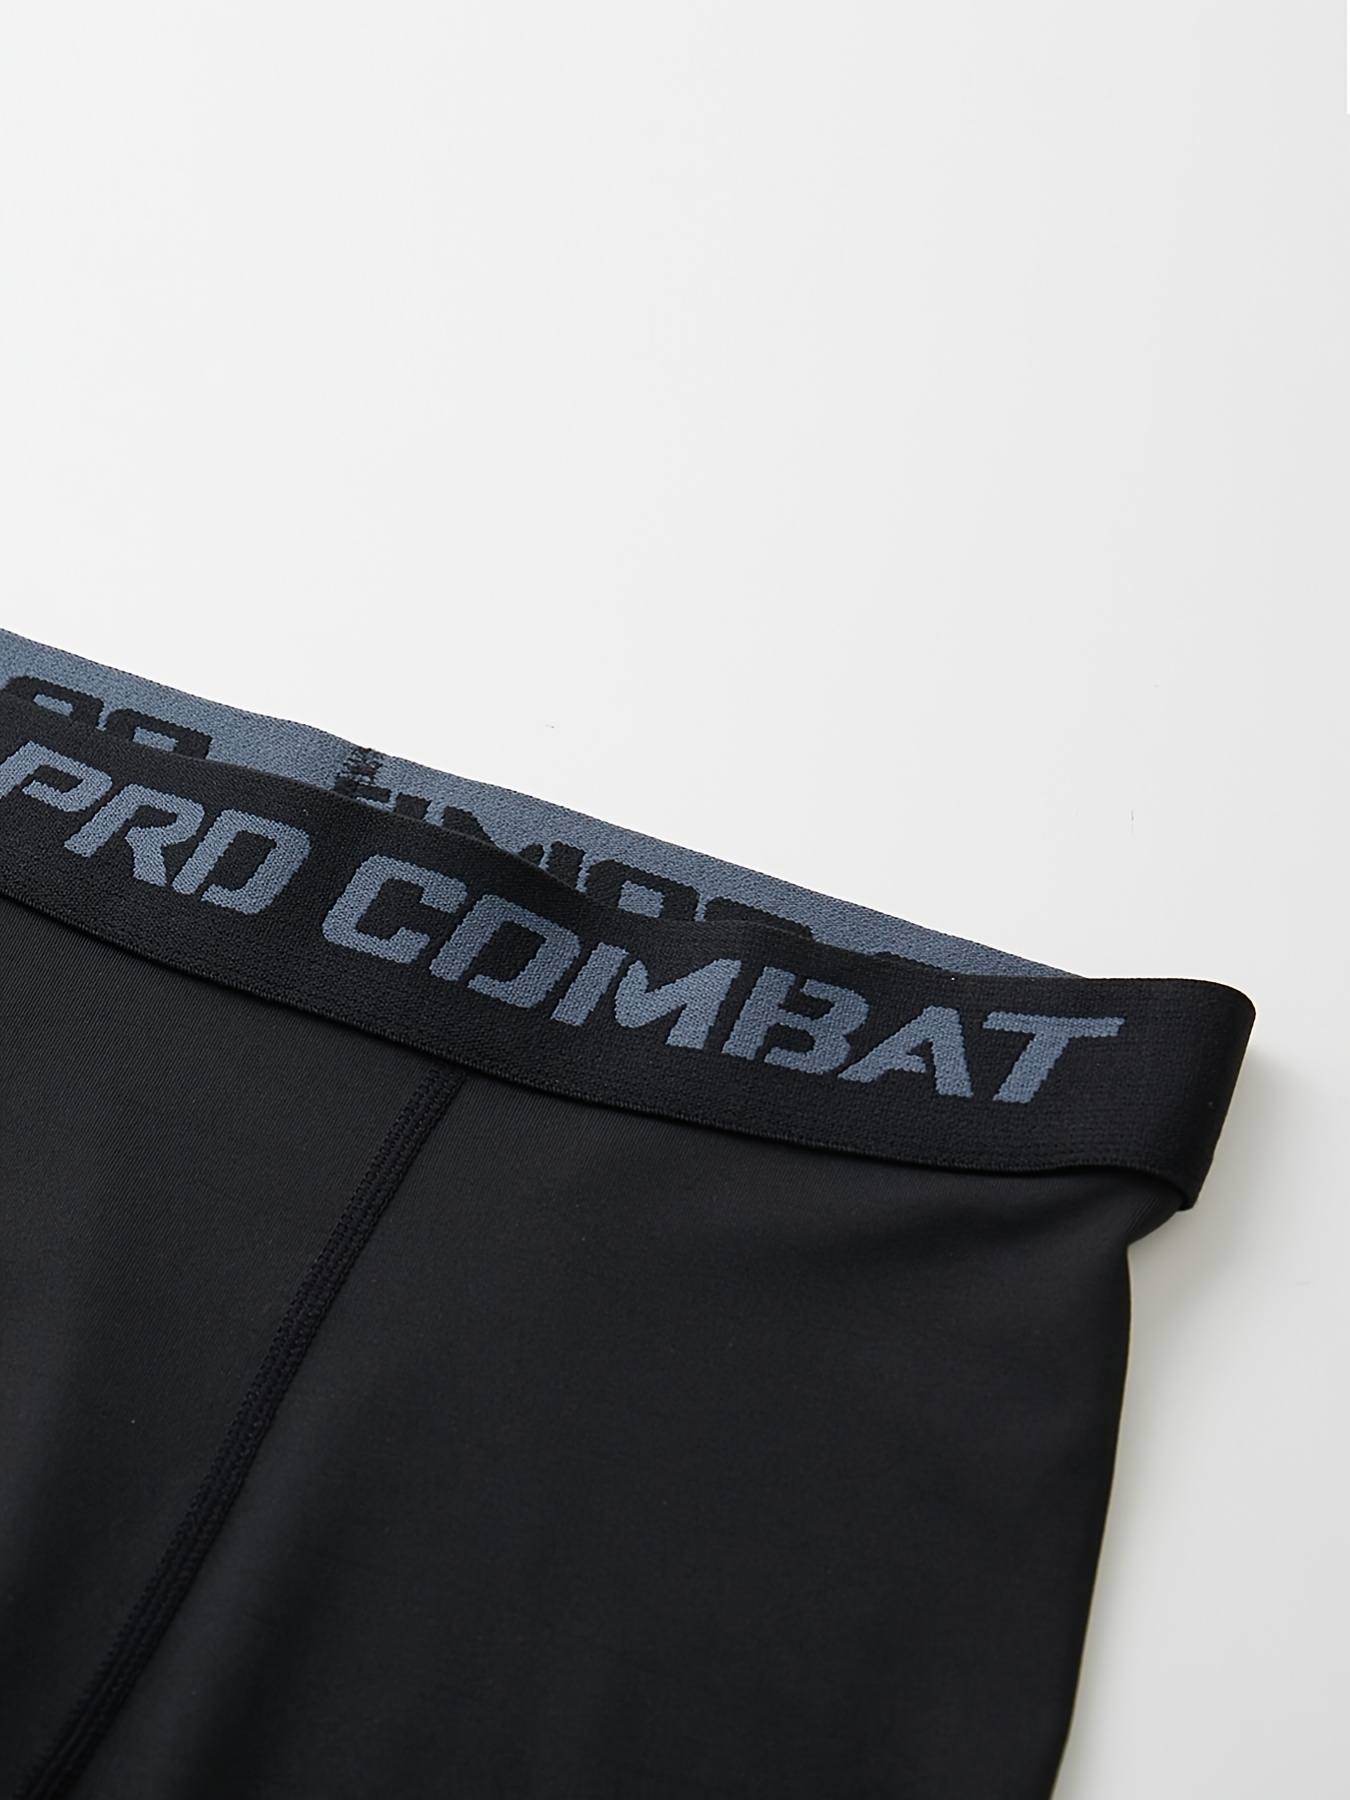 Adult Football Compression Base Layer Tight Short Keepcomfort 100 Black